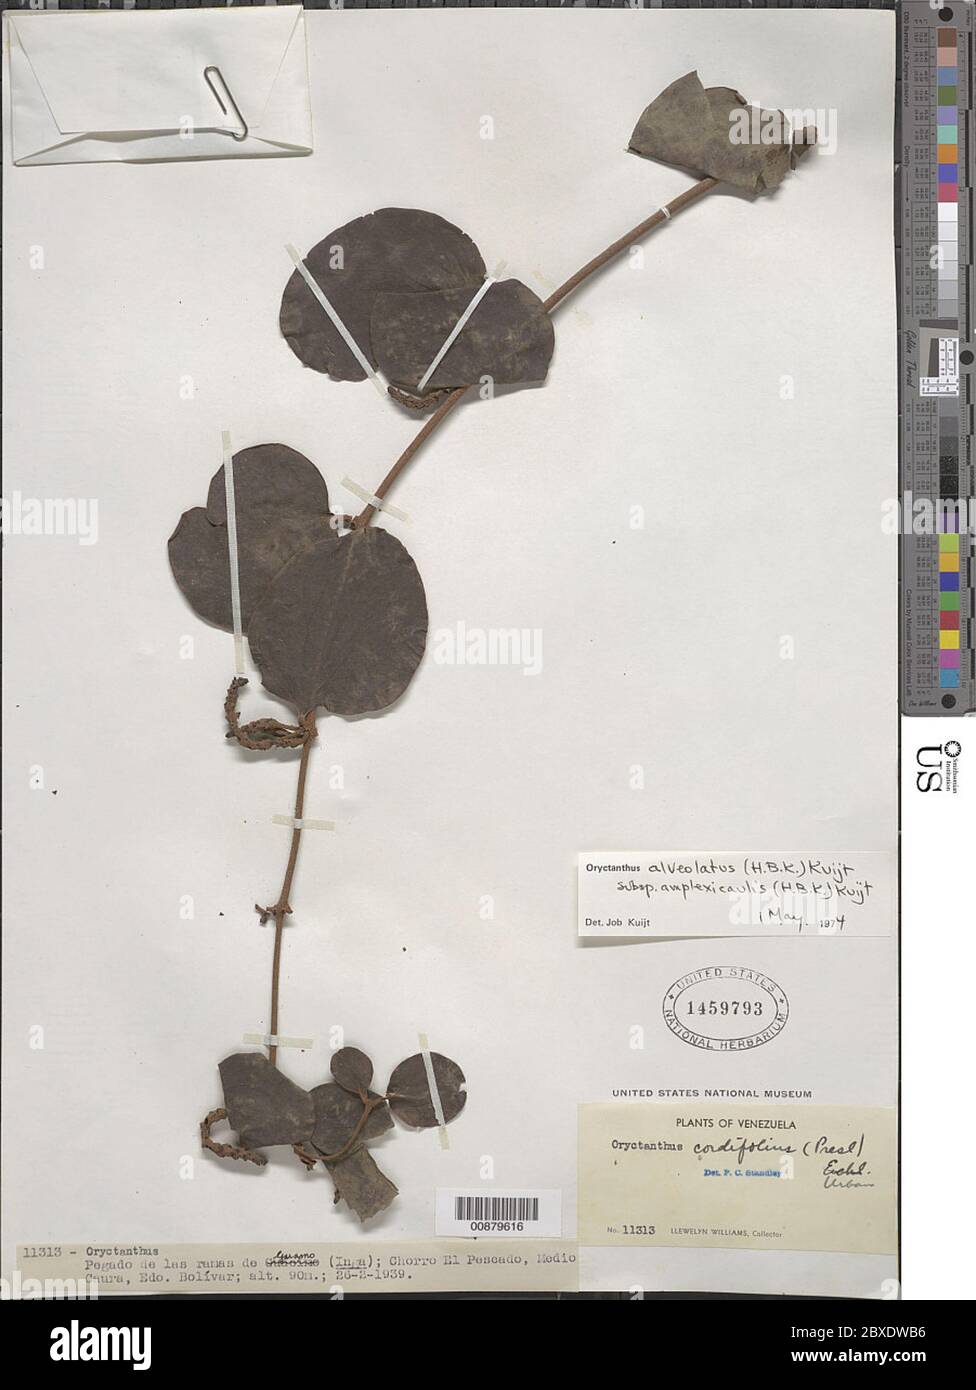 Oryctanthus alveolatus subsp amplexicaulis Kunth Kuijt Oryctanthus alveolatus subsp amplexicaulis Kunth Kuijt. Stock Photo